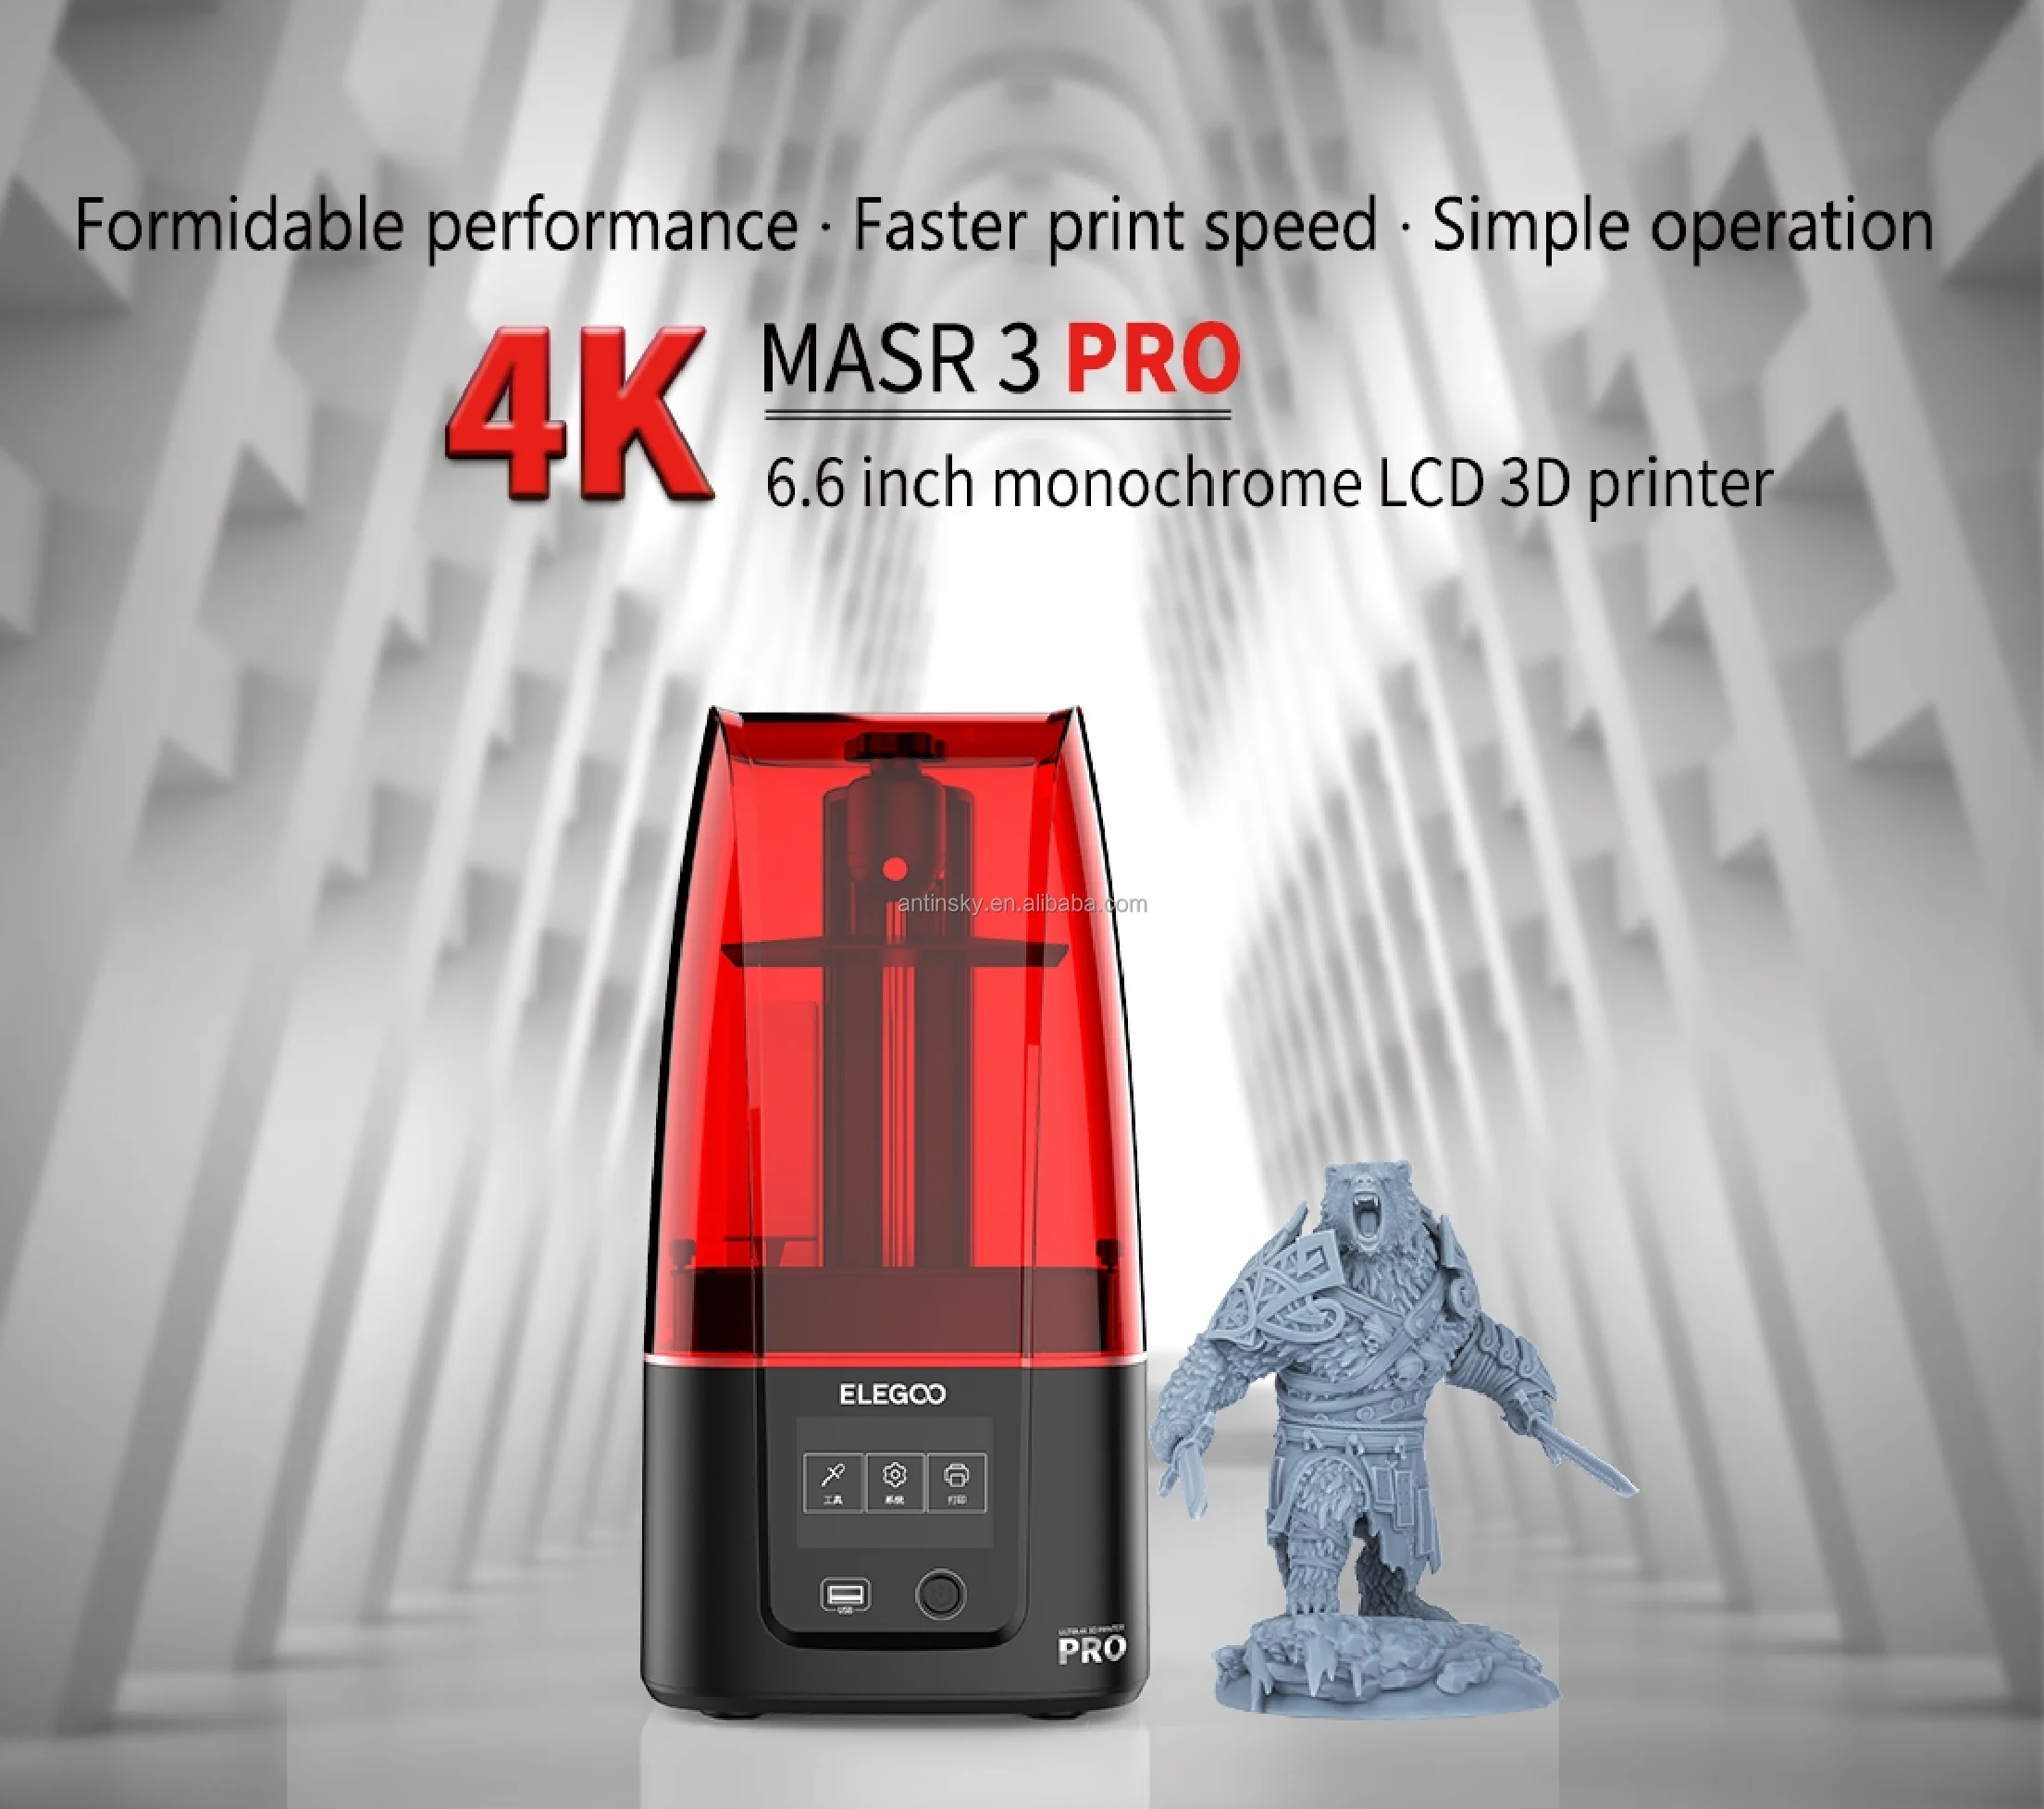 ELEGOO MARS 3 pro 4K MONO LCD resin 3D PRINTER 143*89.6*175mm